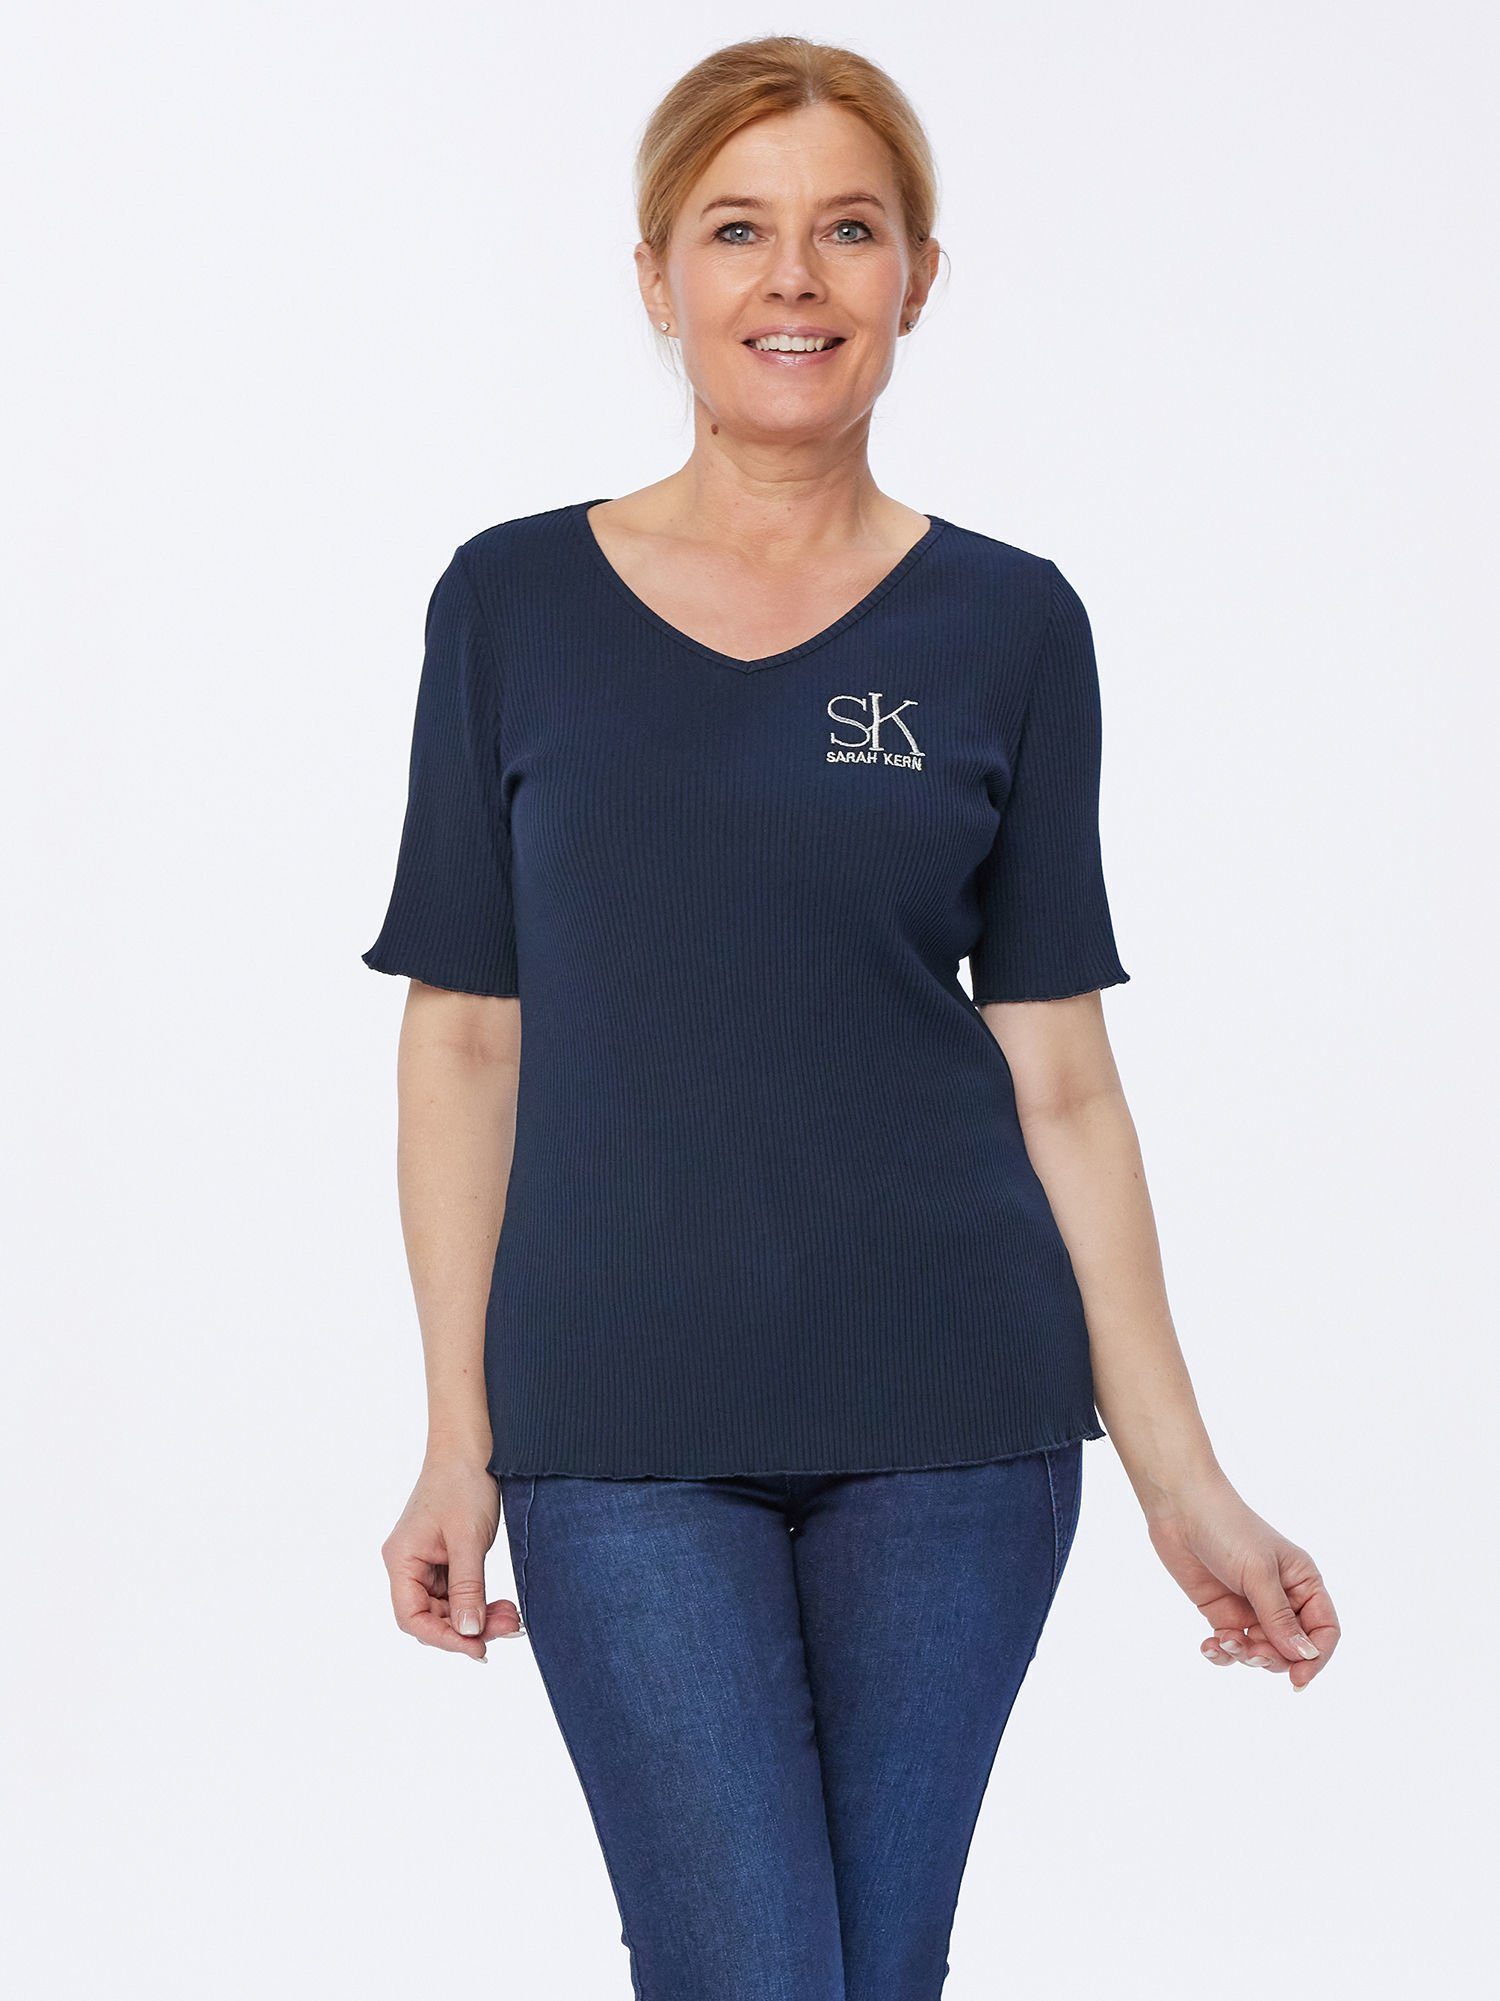 Sarah Kern T-Shirt Rippshirt Oberteil-figurbetont mit SK-Logo | T-Shirts